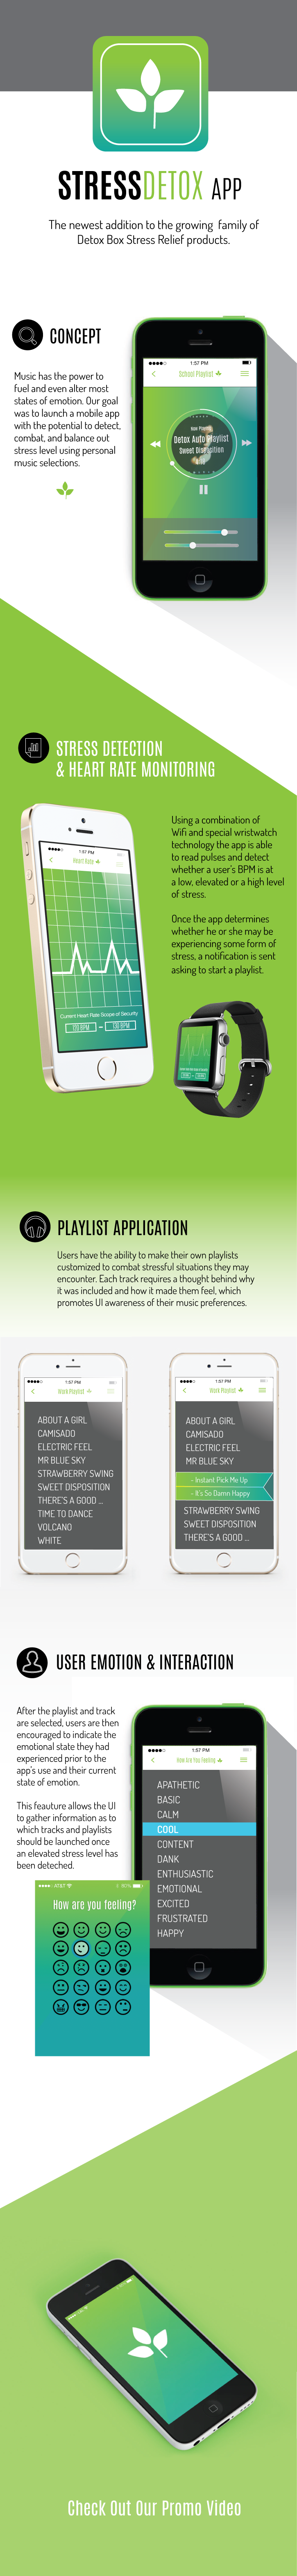 detox app detox box stress relief app stress relief app music app playlist app